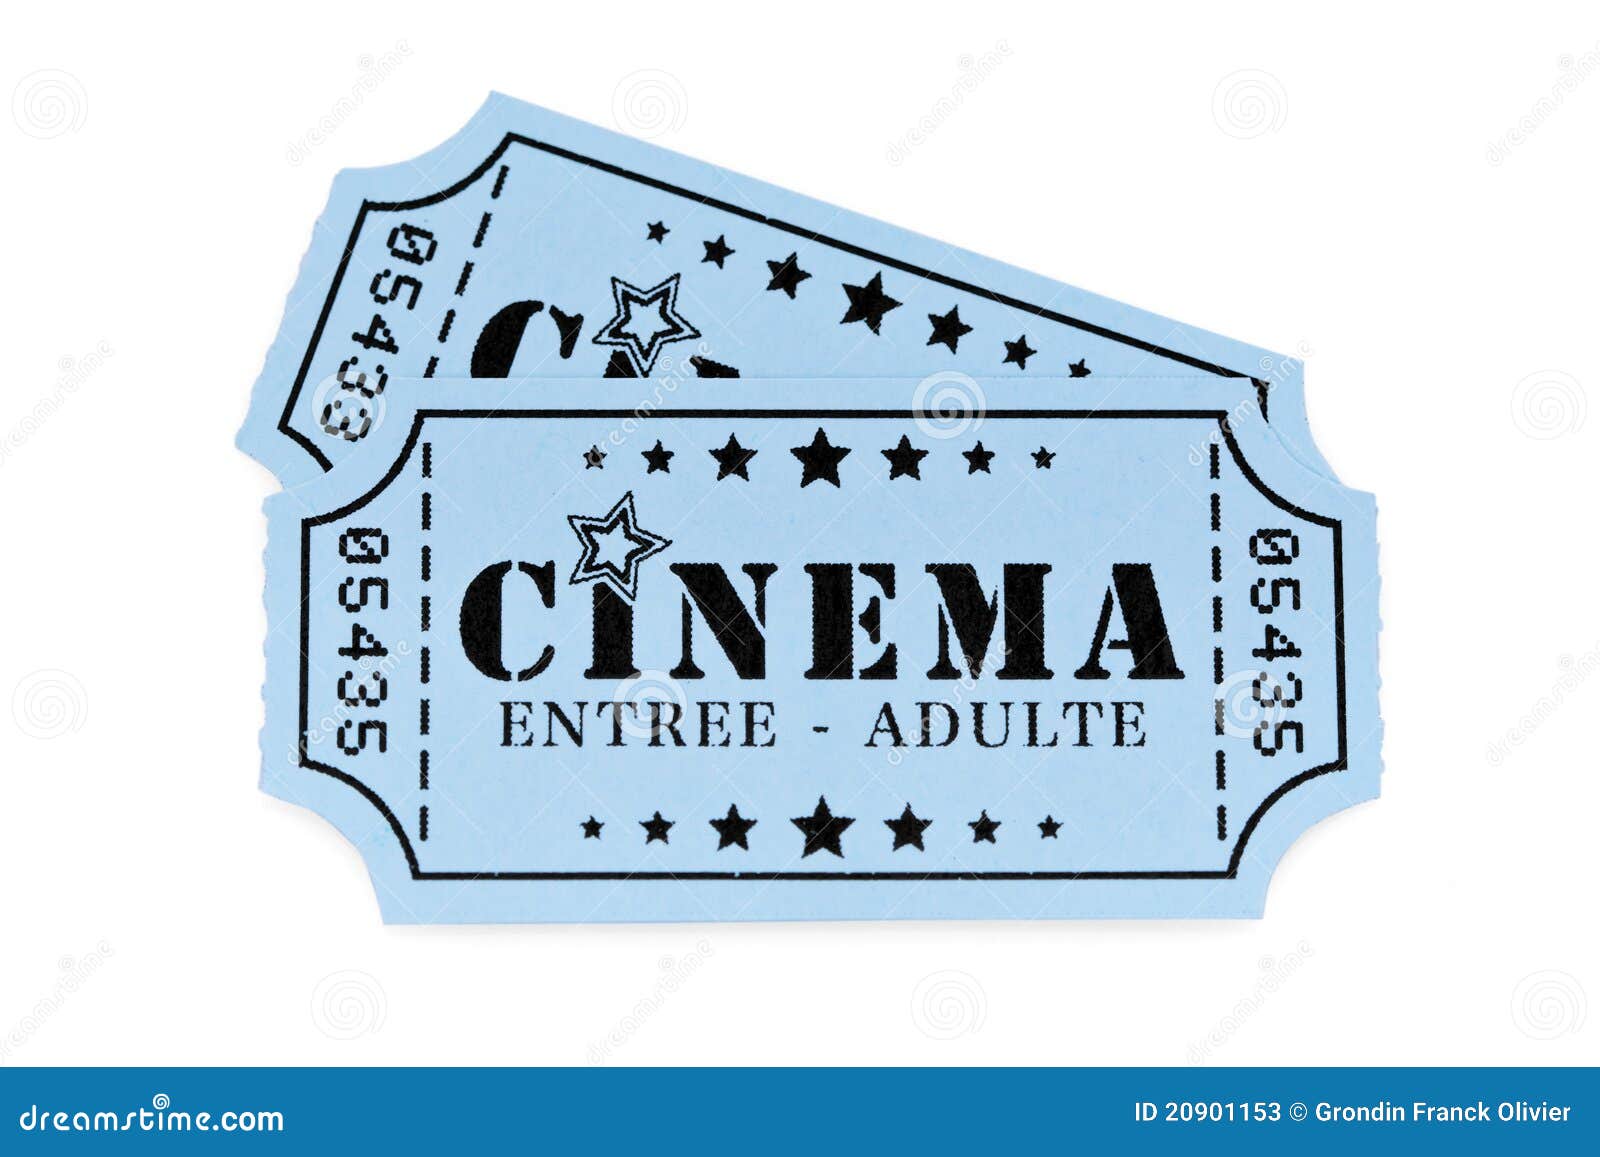 french cinema tickets